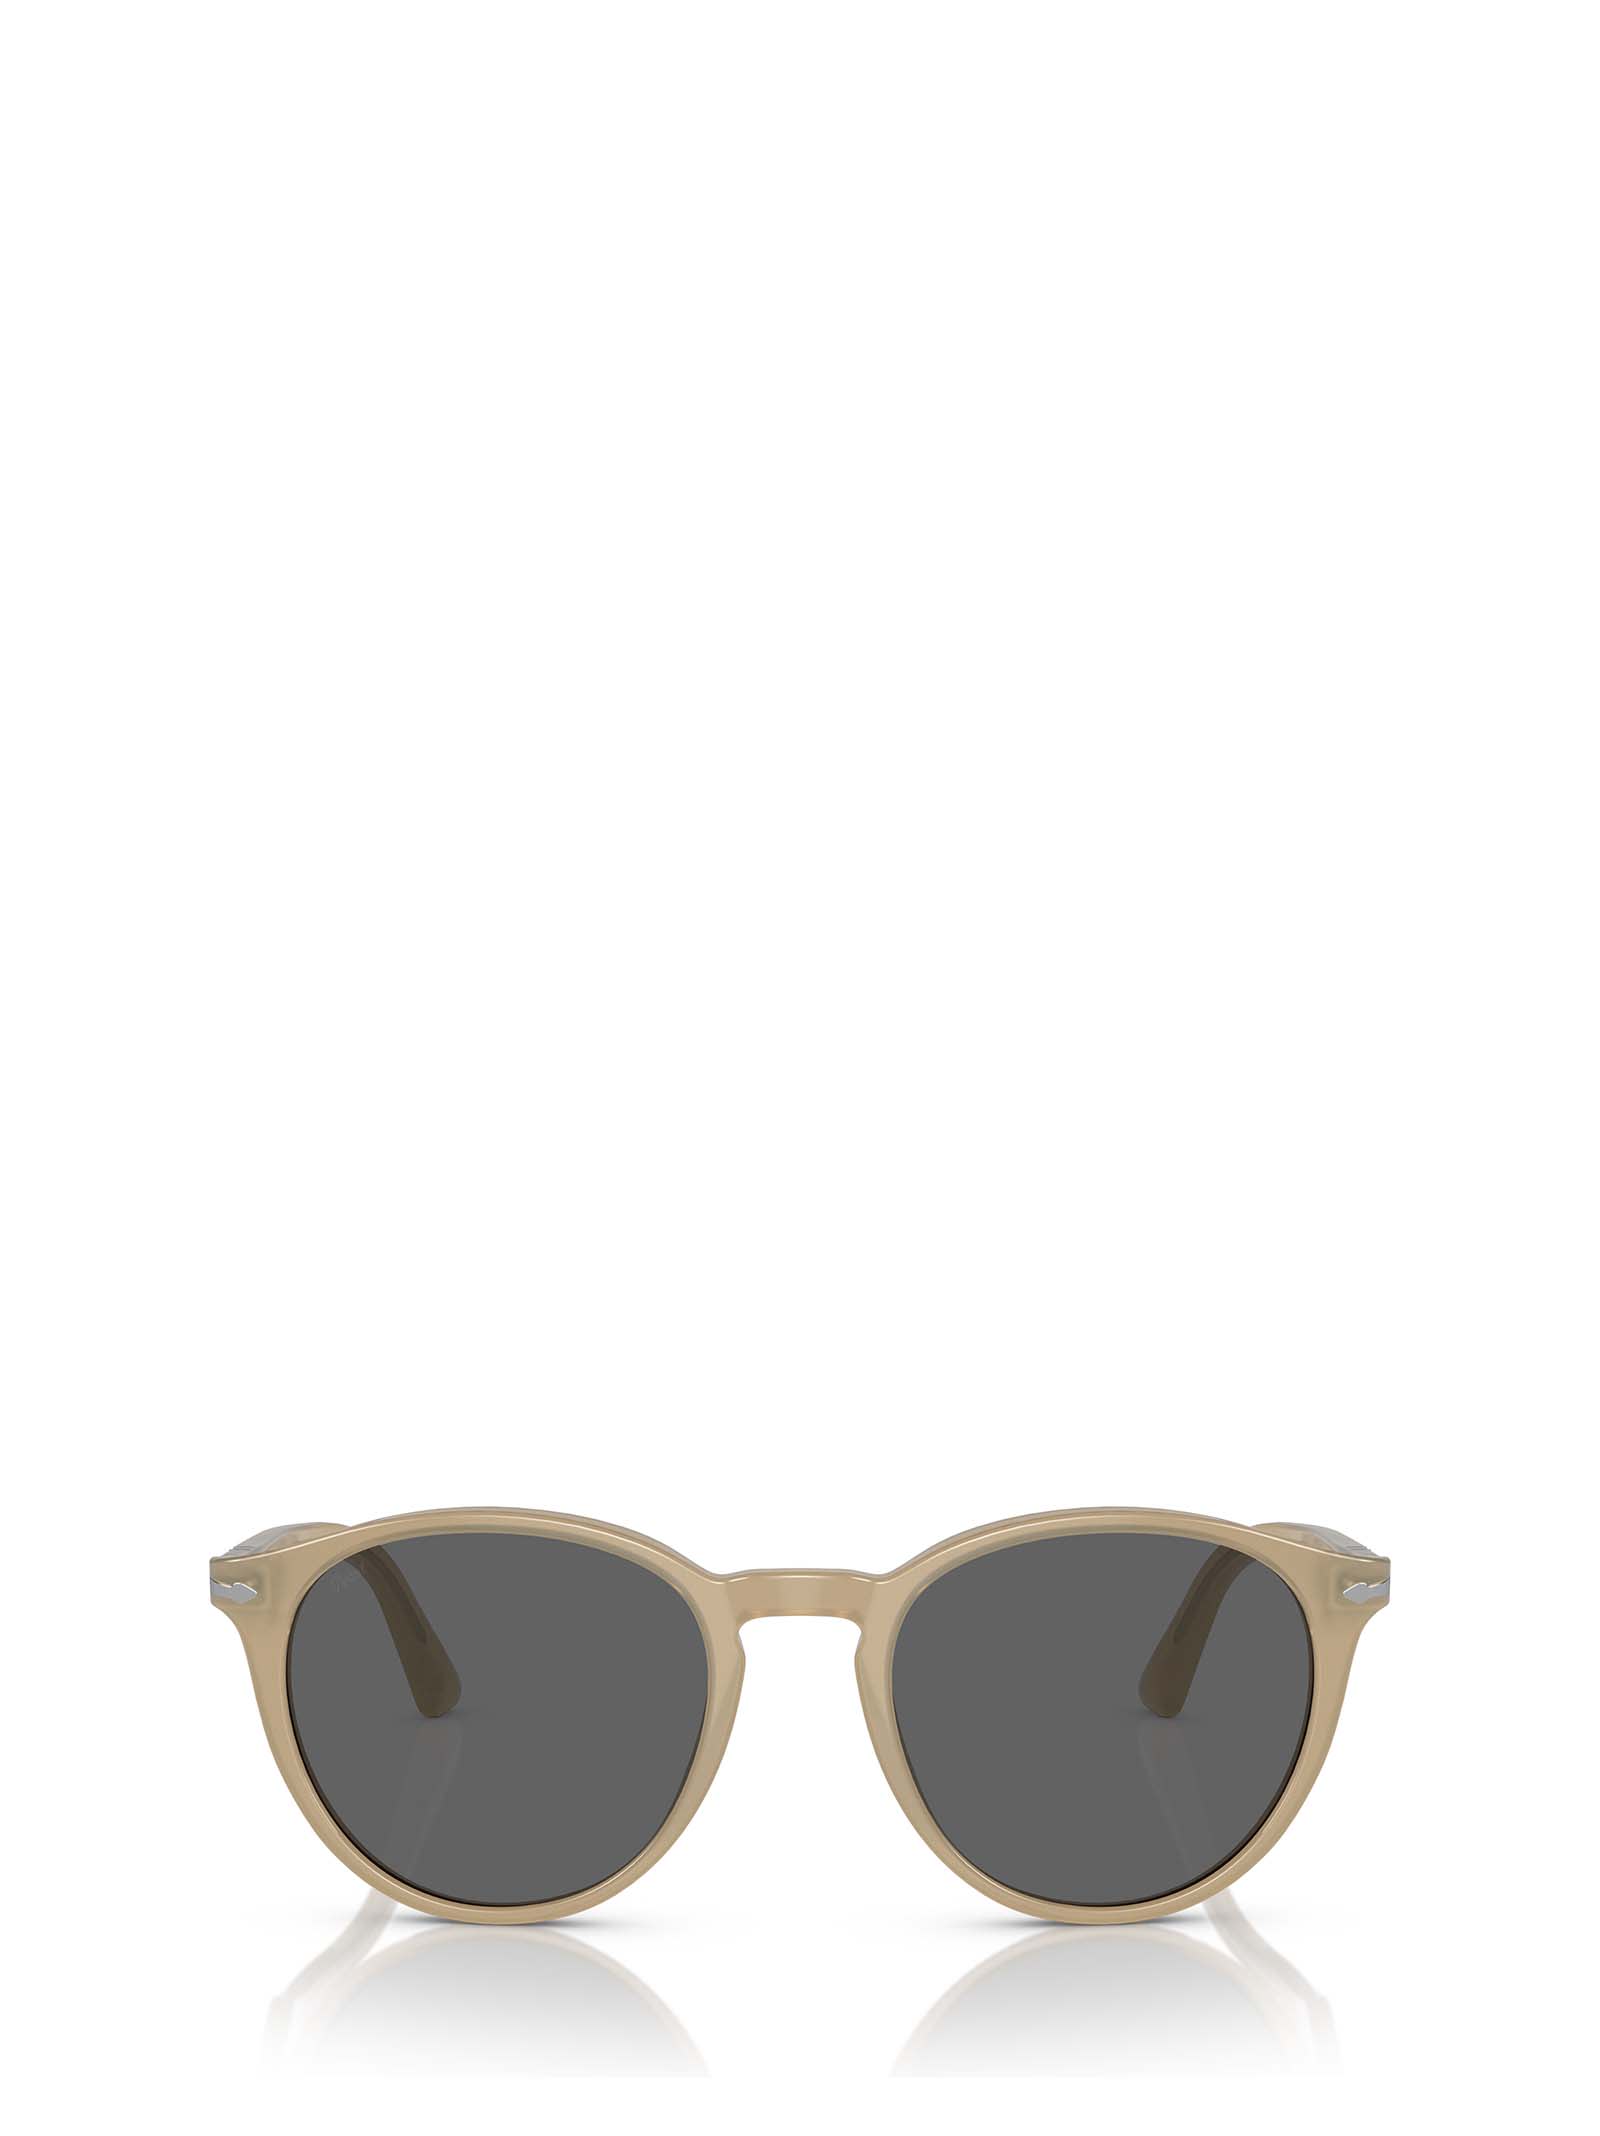 Persol Po3152s Opal Beige Sunglasses